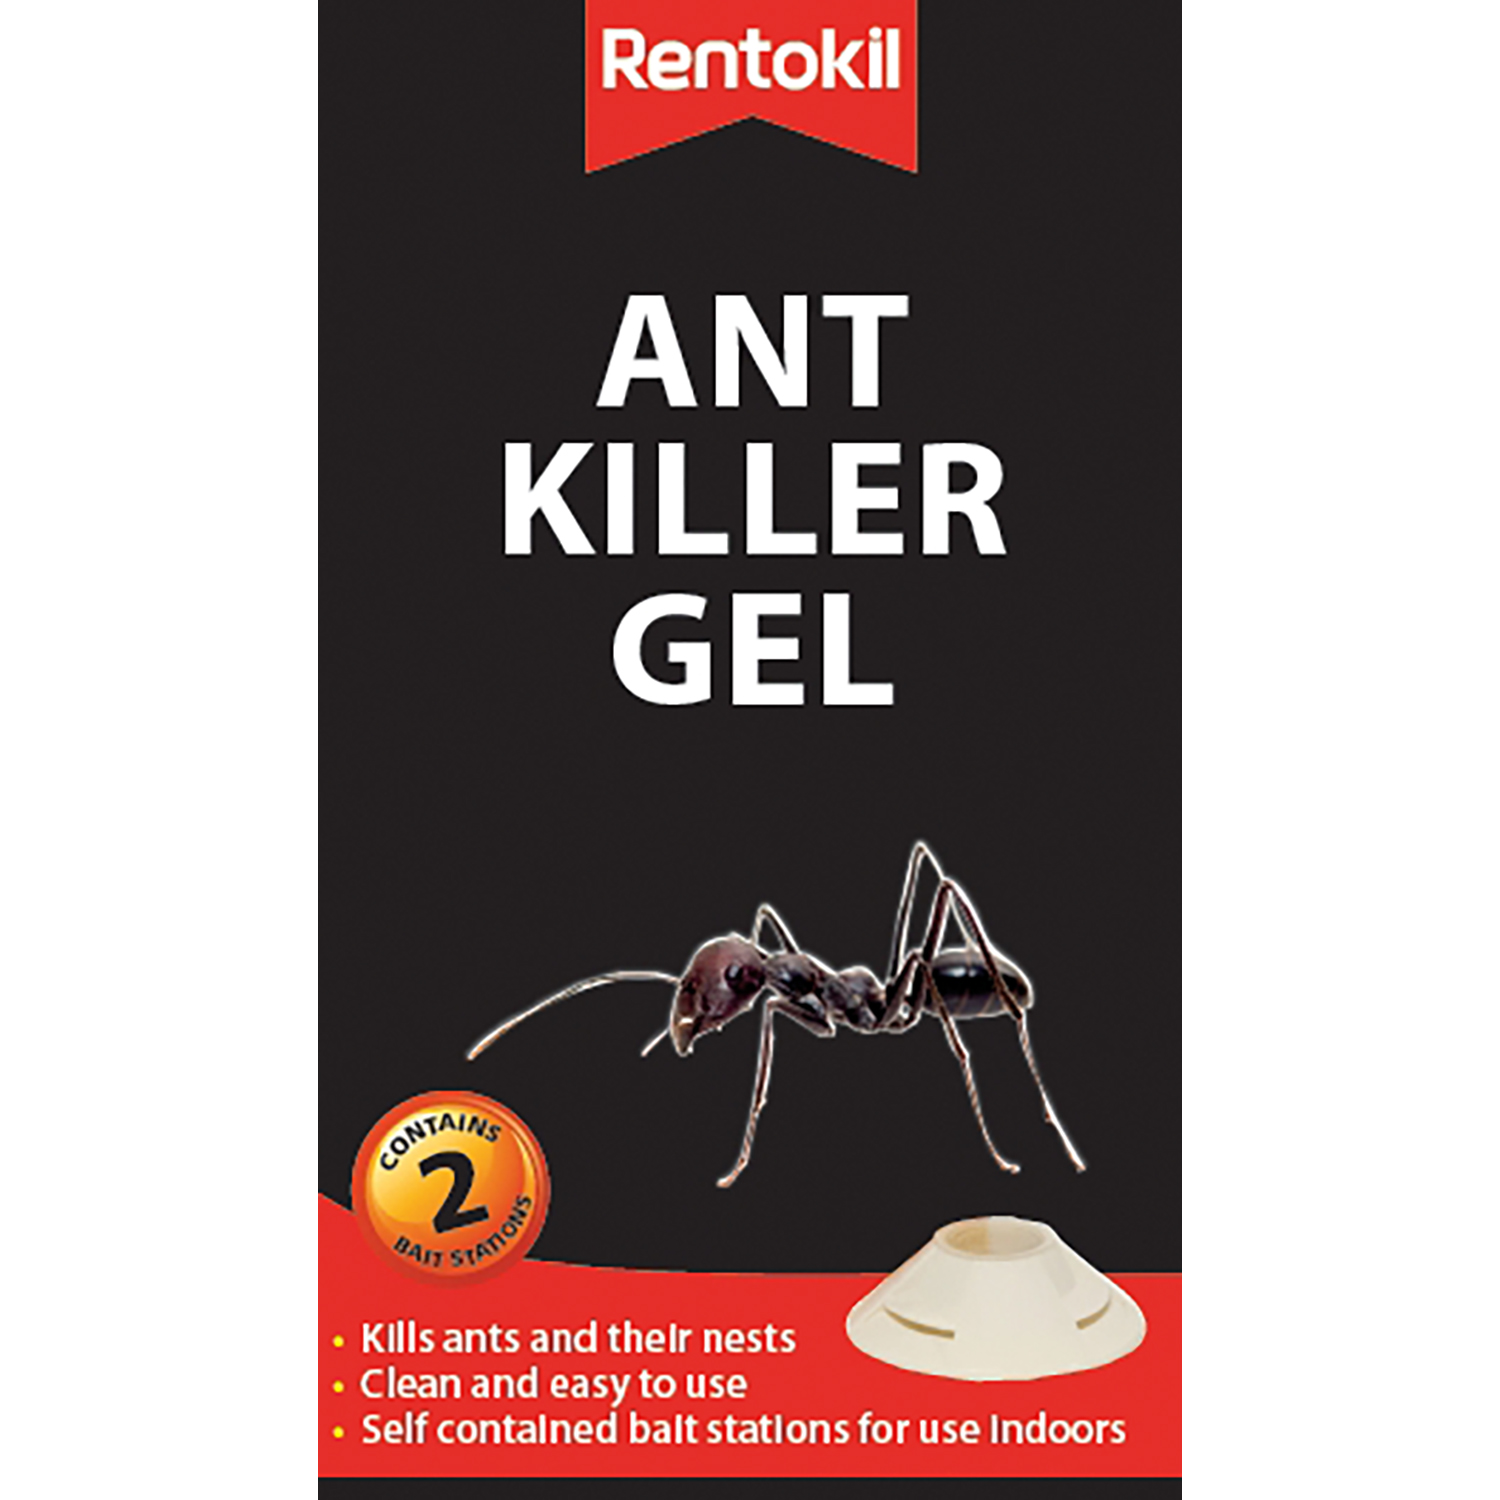 RENTOKIL ANT KILLER GEL TWIN PACK